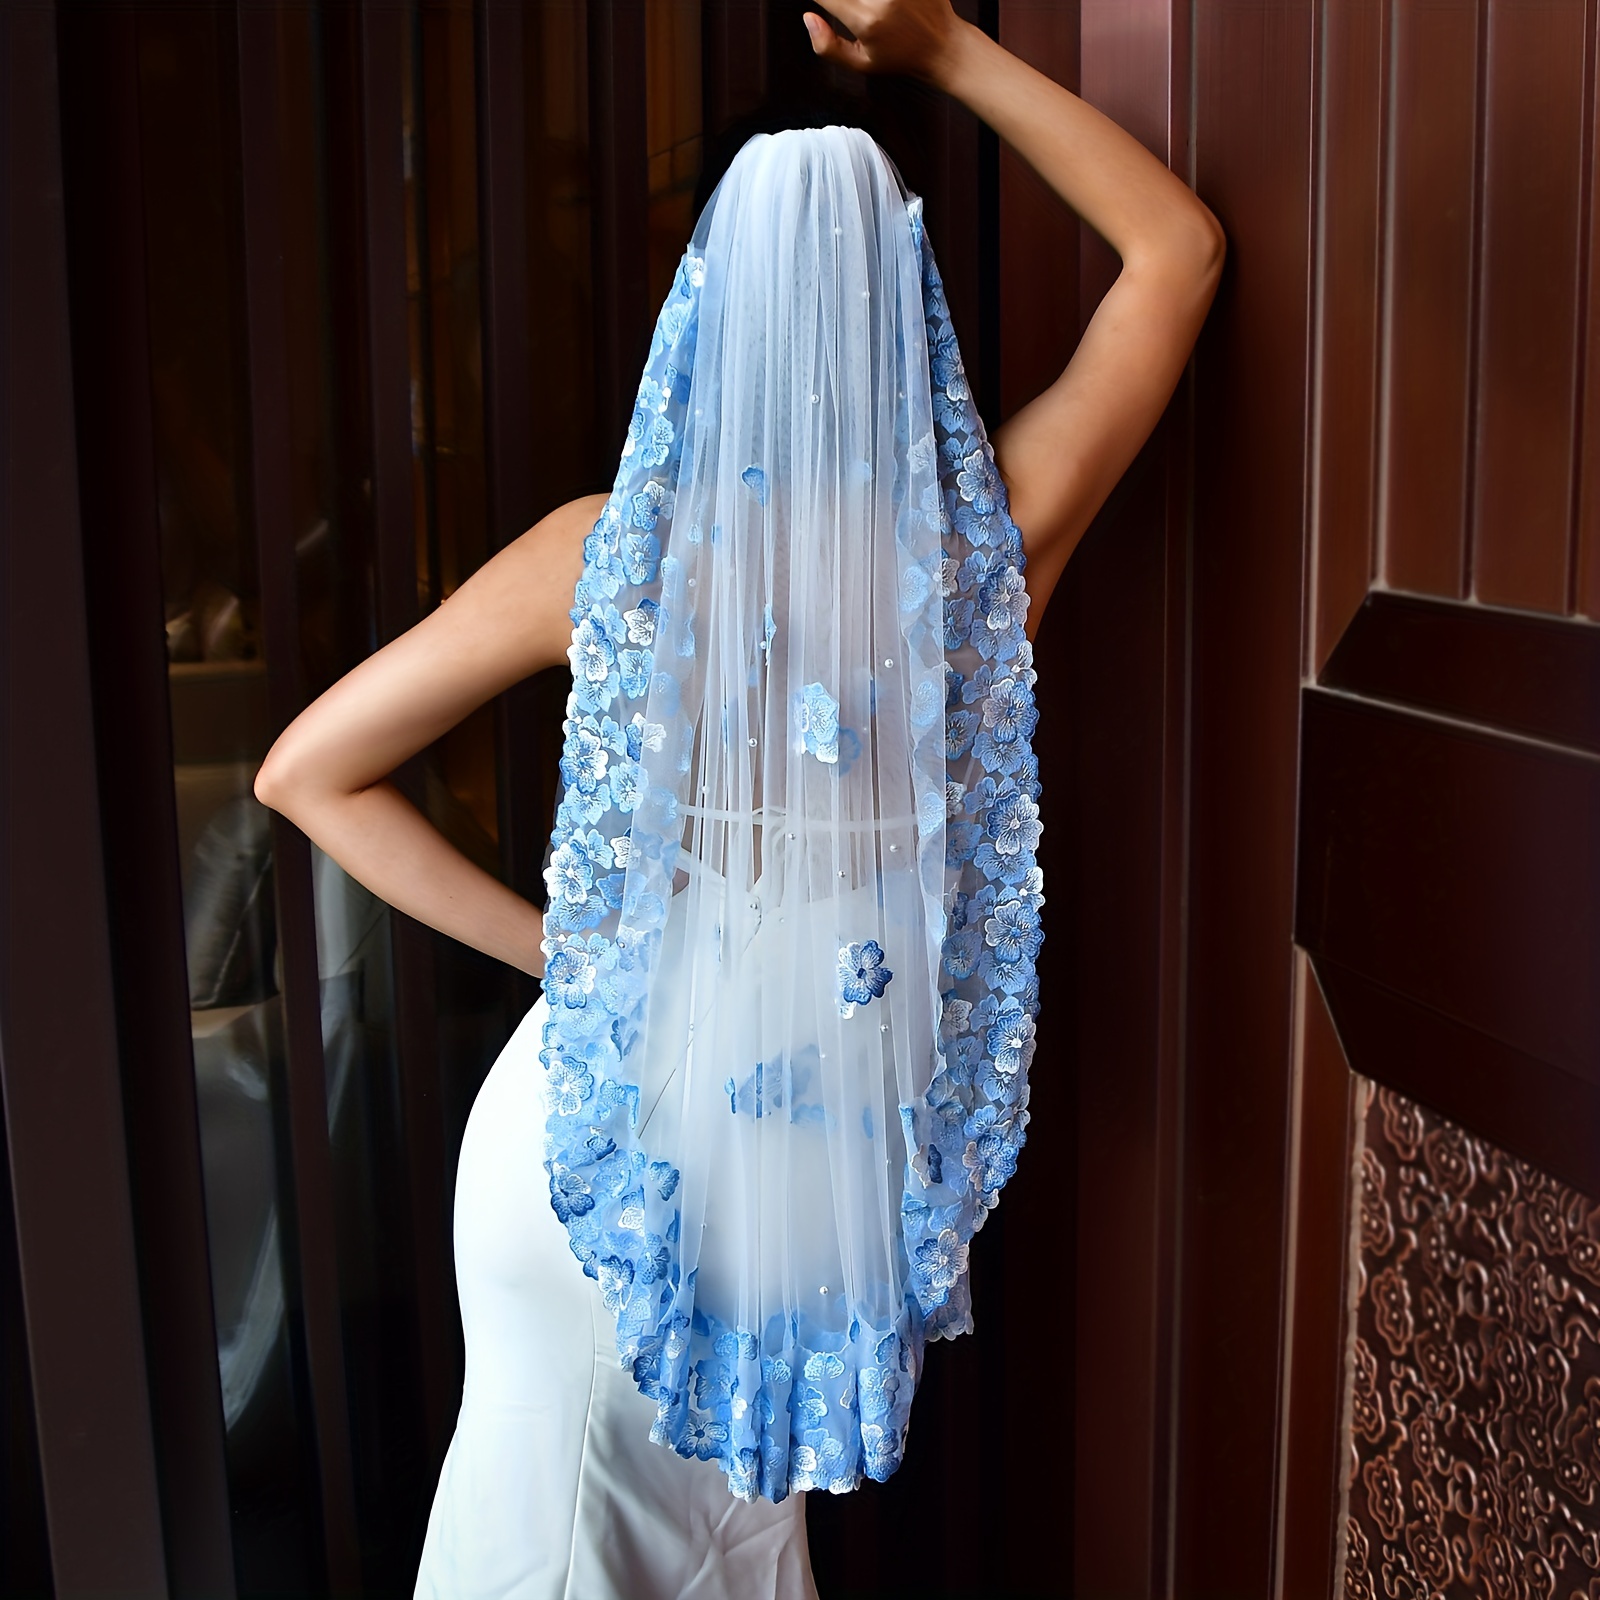 Fantasia in Silk: An Embroidery Design Exploration –